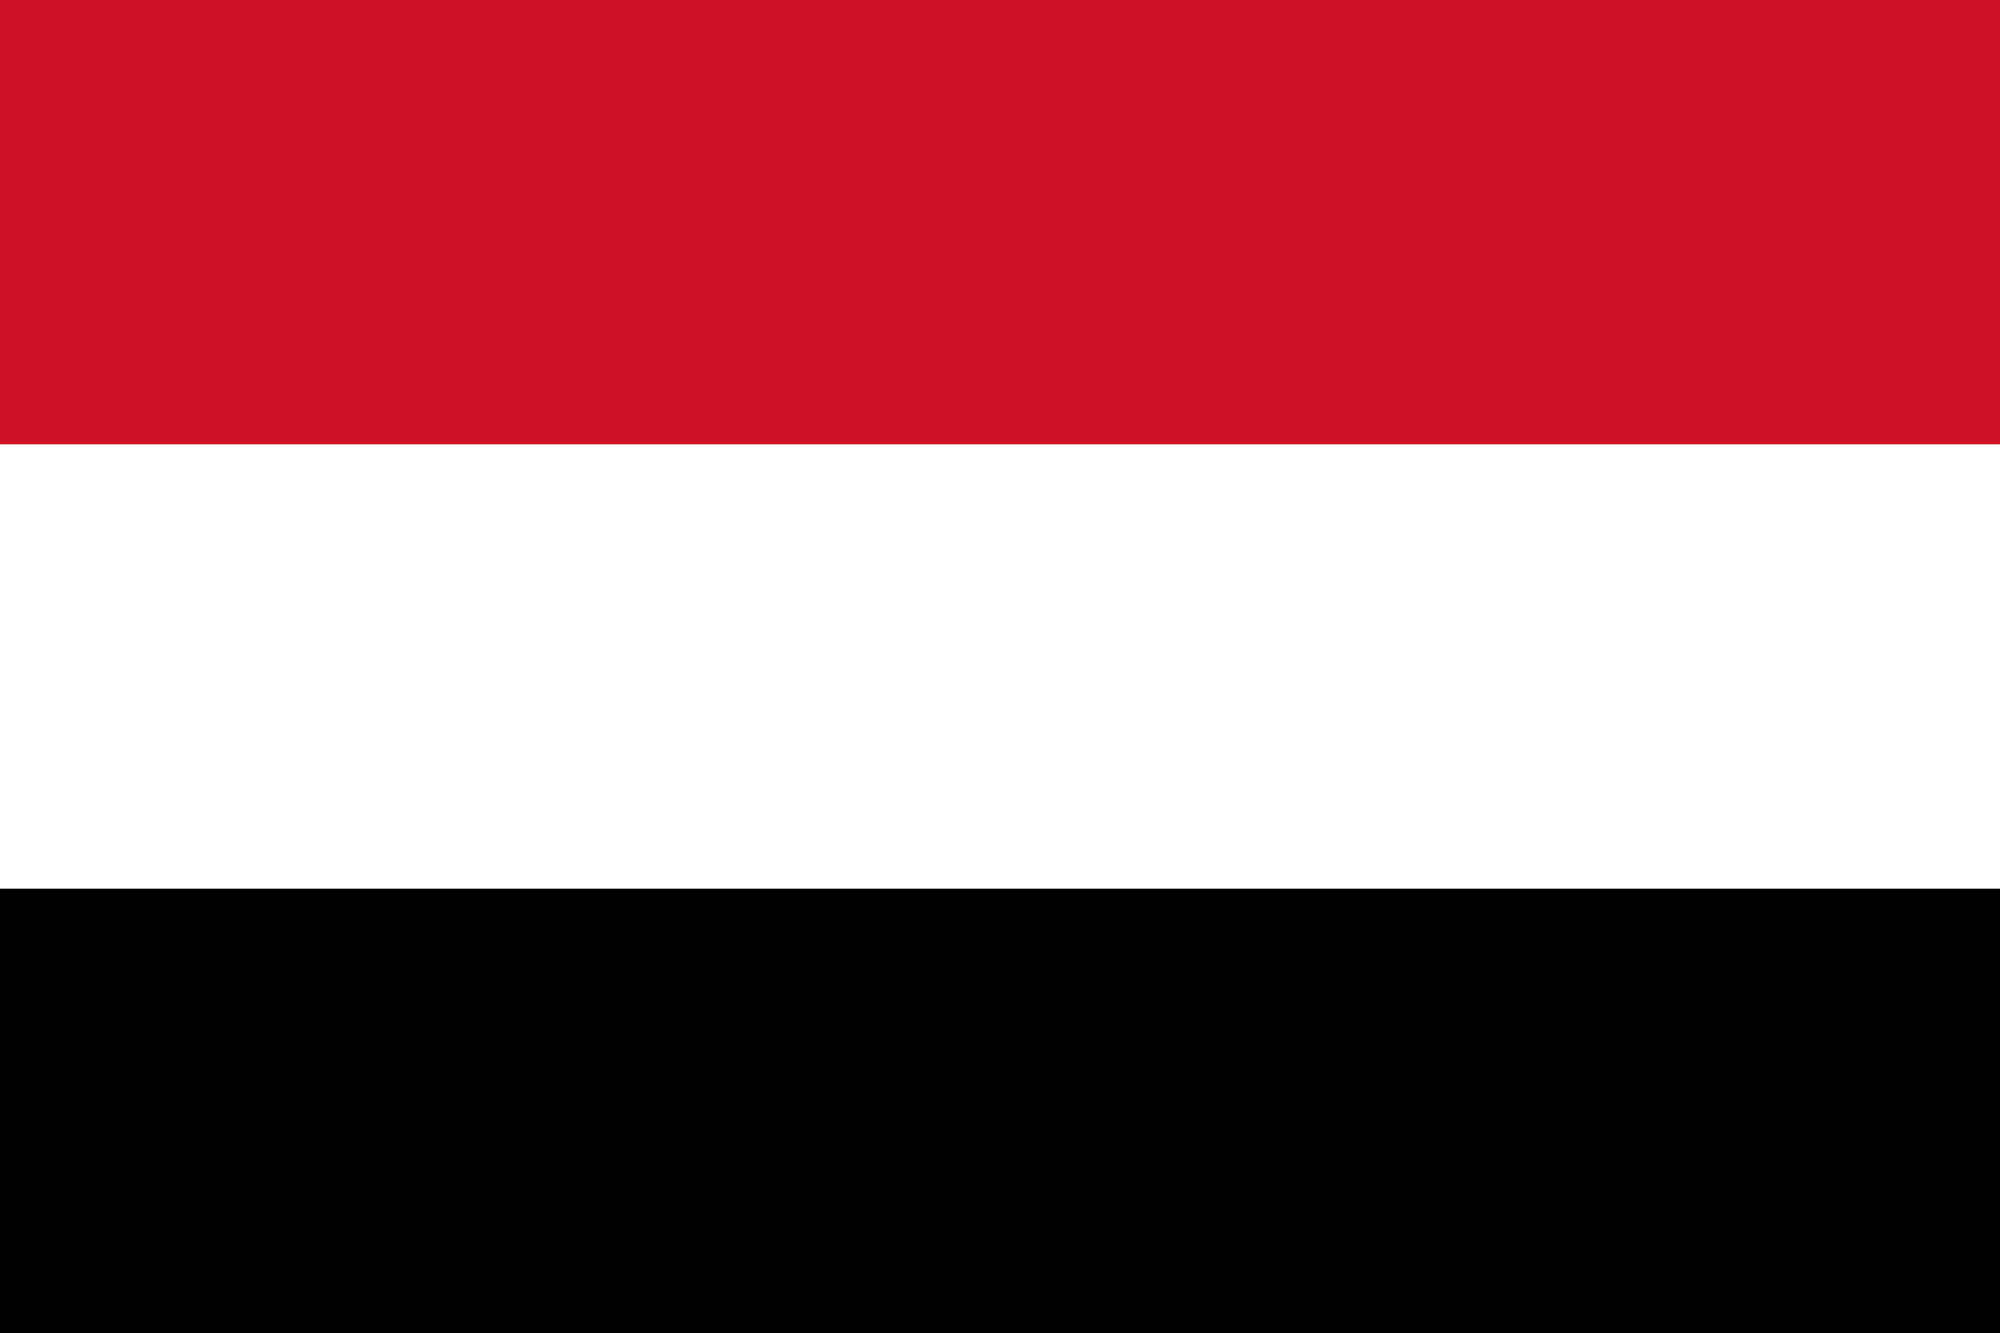 Saudi-Led coalition attacks military targets in Houthi-controlled Sanaa -Saudi TV